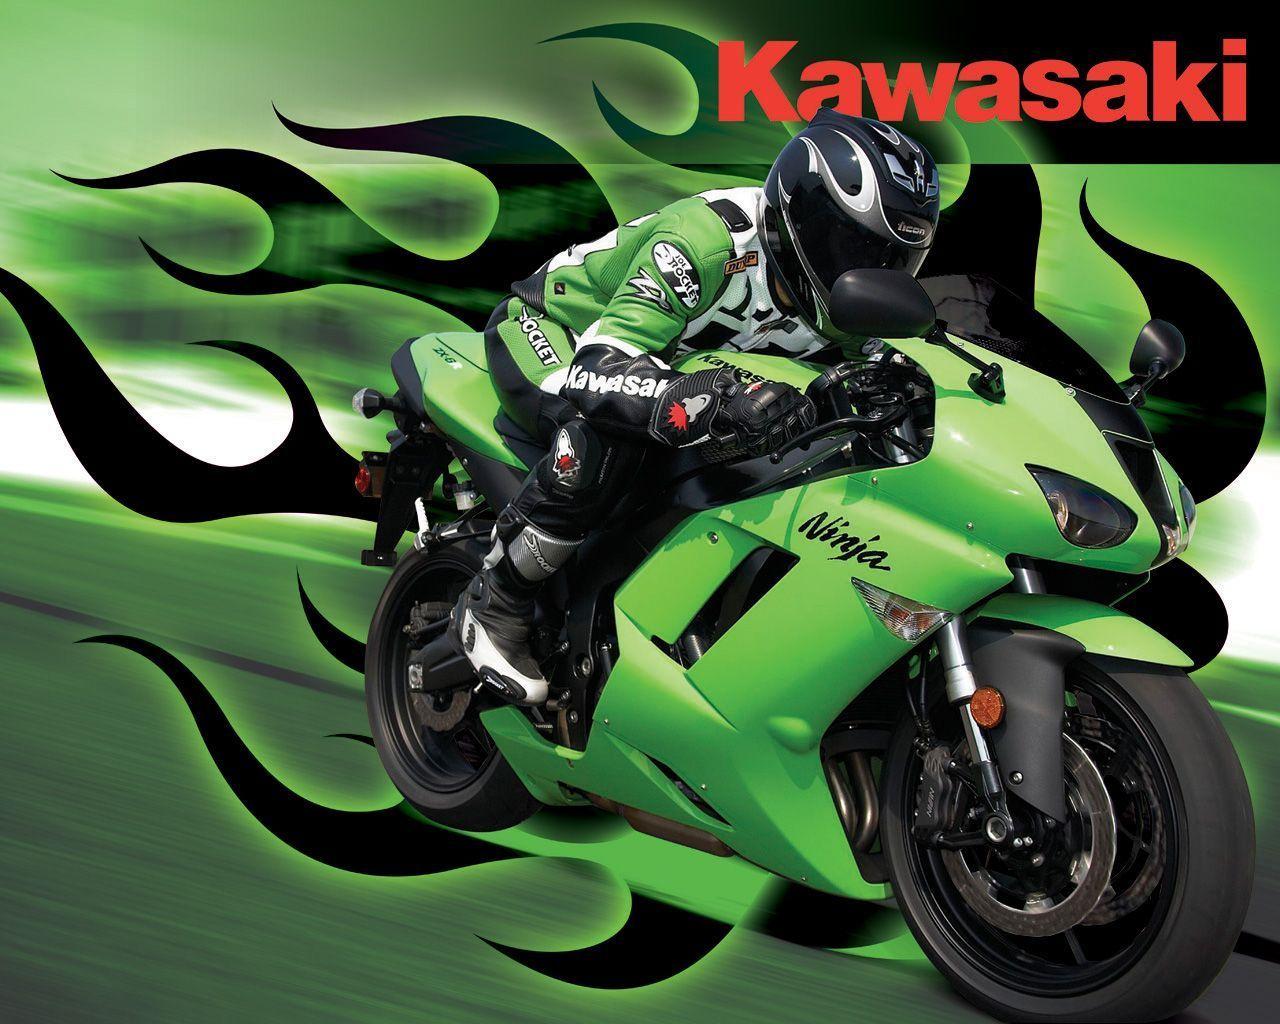 Download Kawasaki Ninja Wallpaper 1280x1024 Full Hd Wallpapers